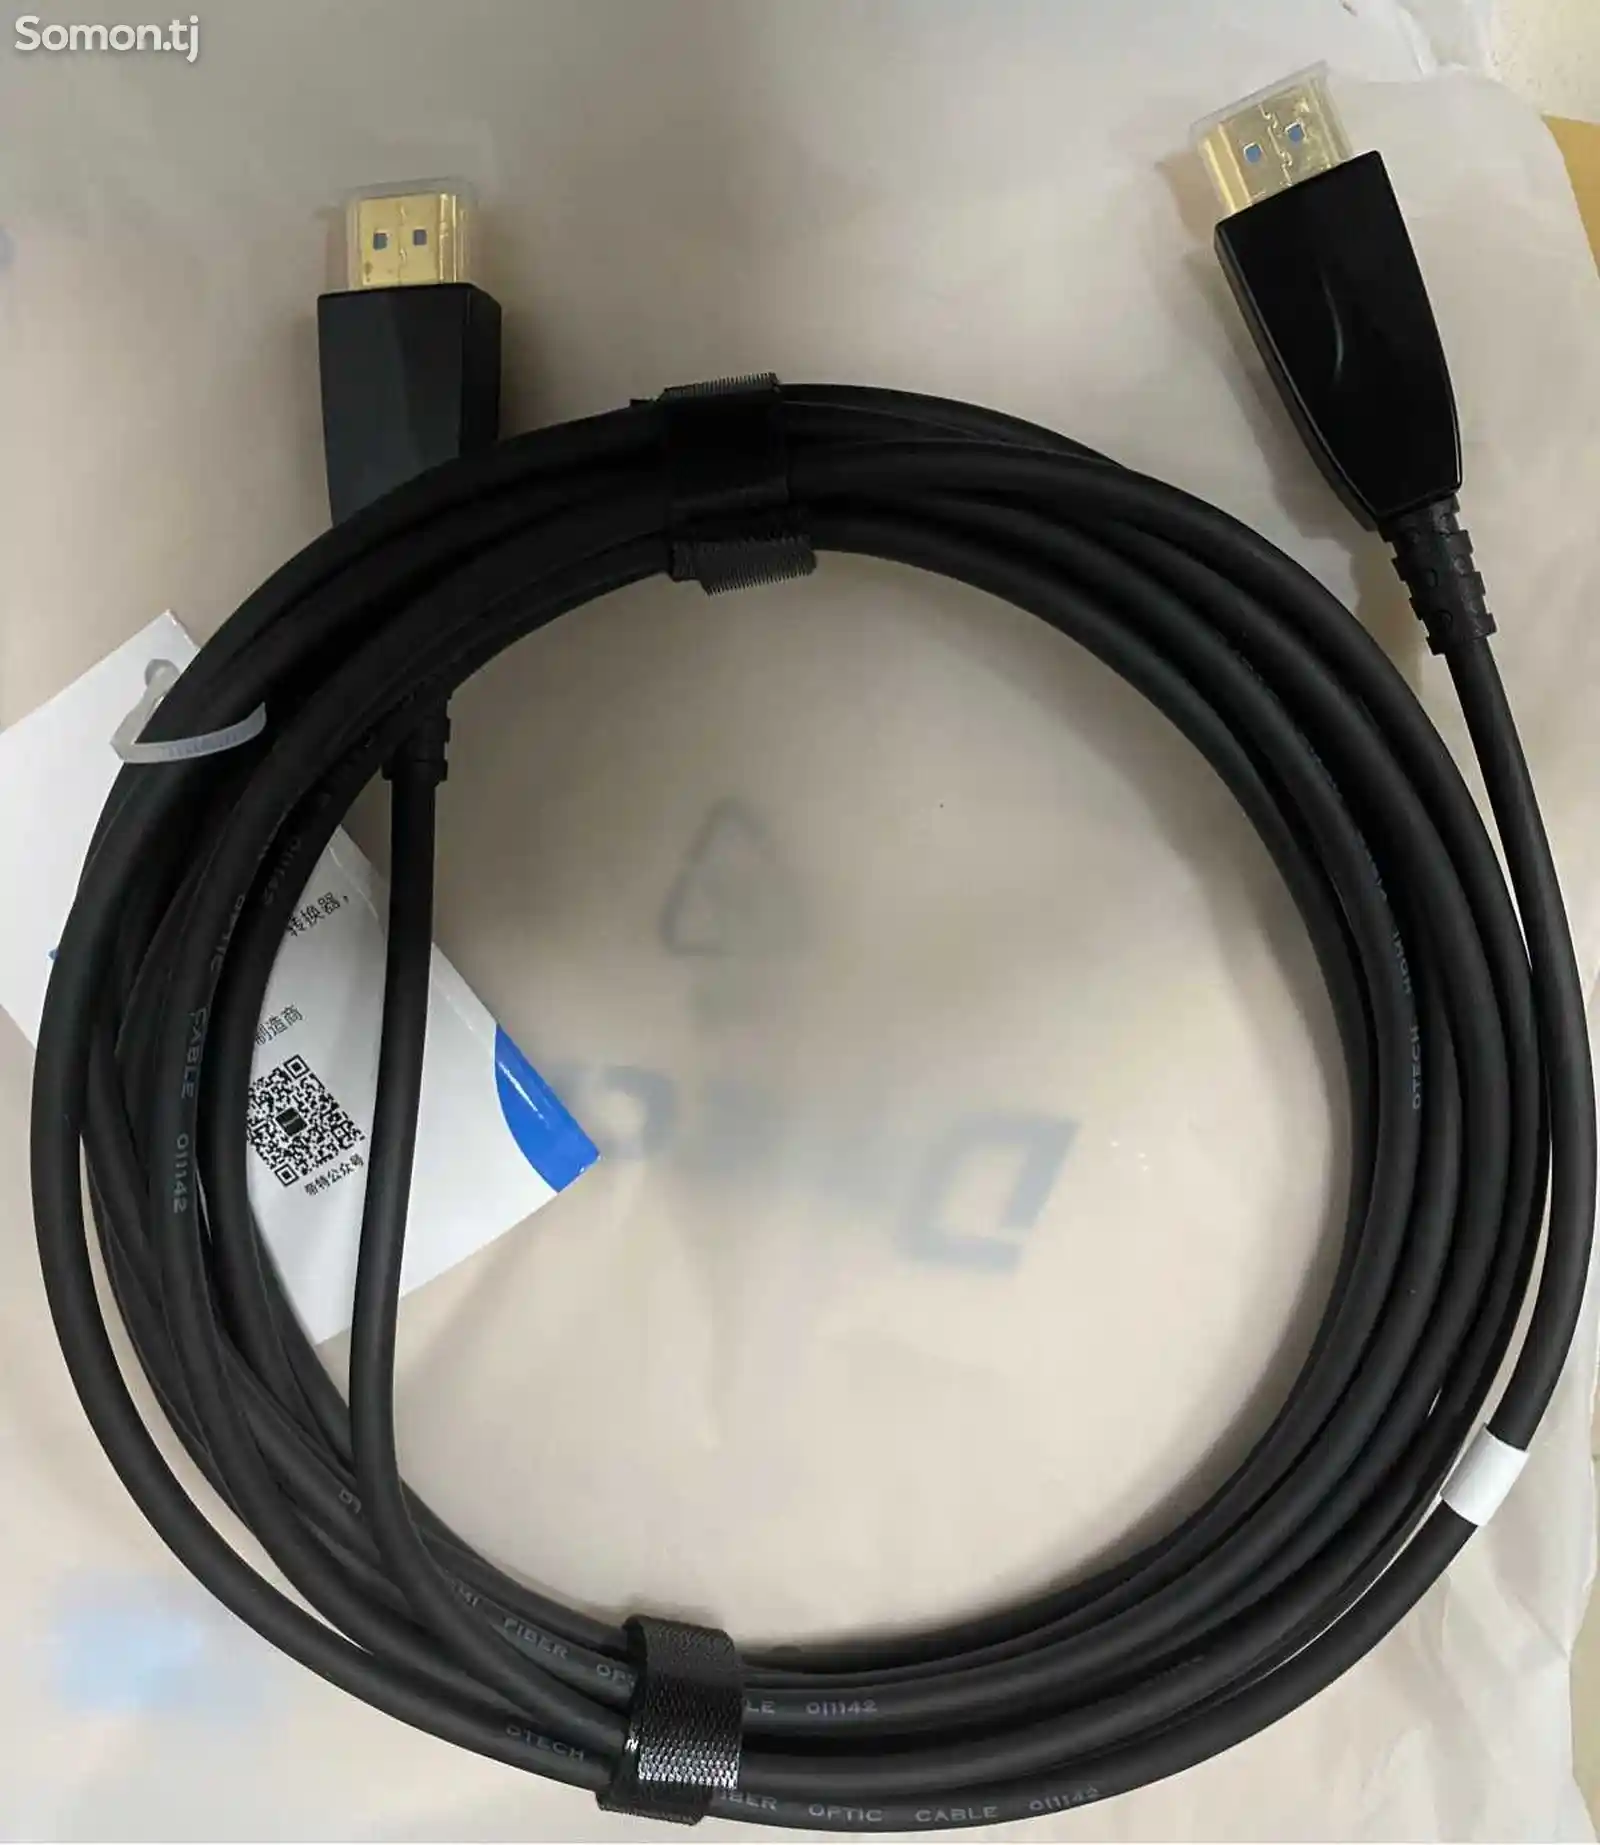 HDMI кабель оптический без потерь v 2.0 UHD 4K 18 Gbps-5m-1